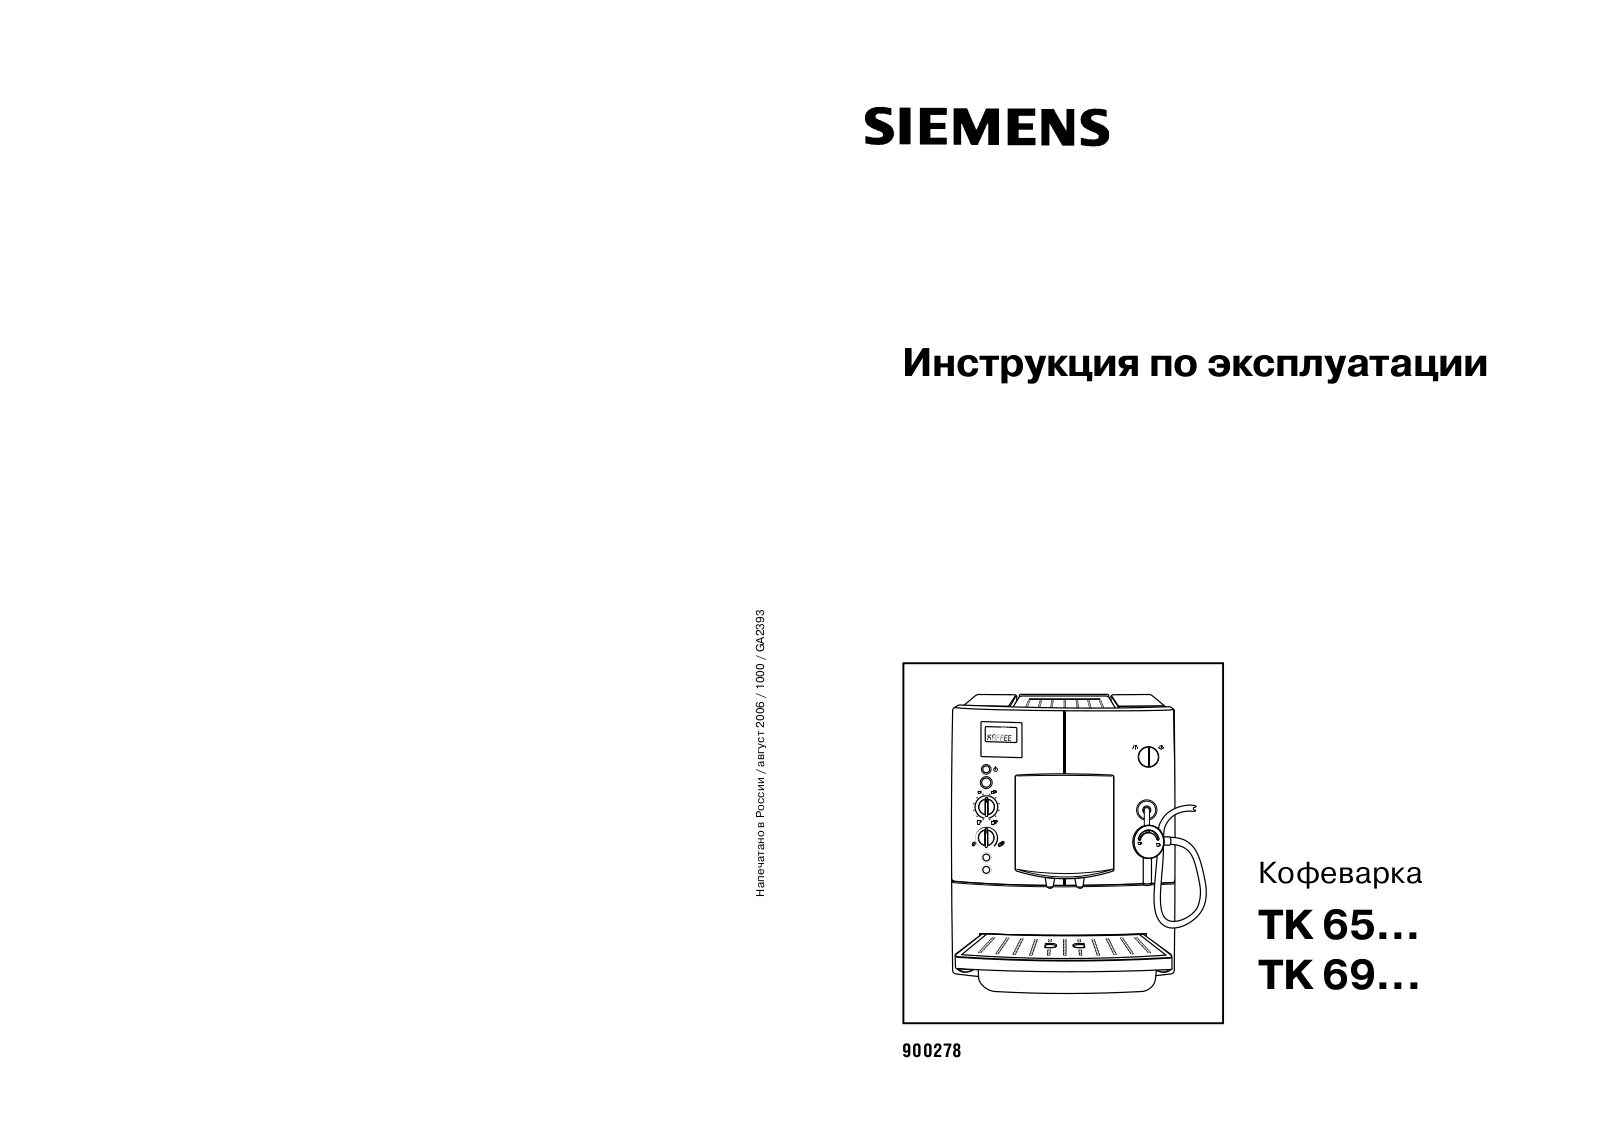 SIEMENS TK 69009 User Manual